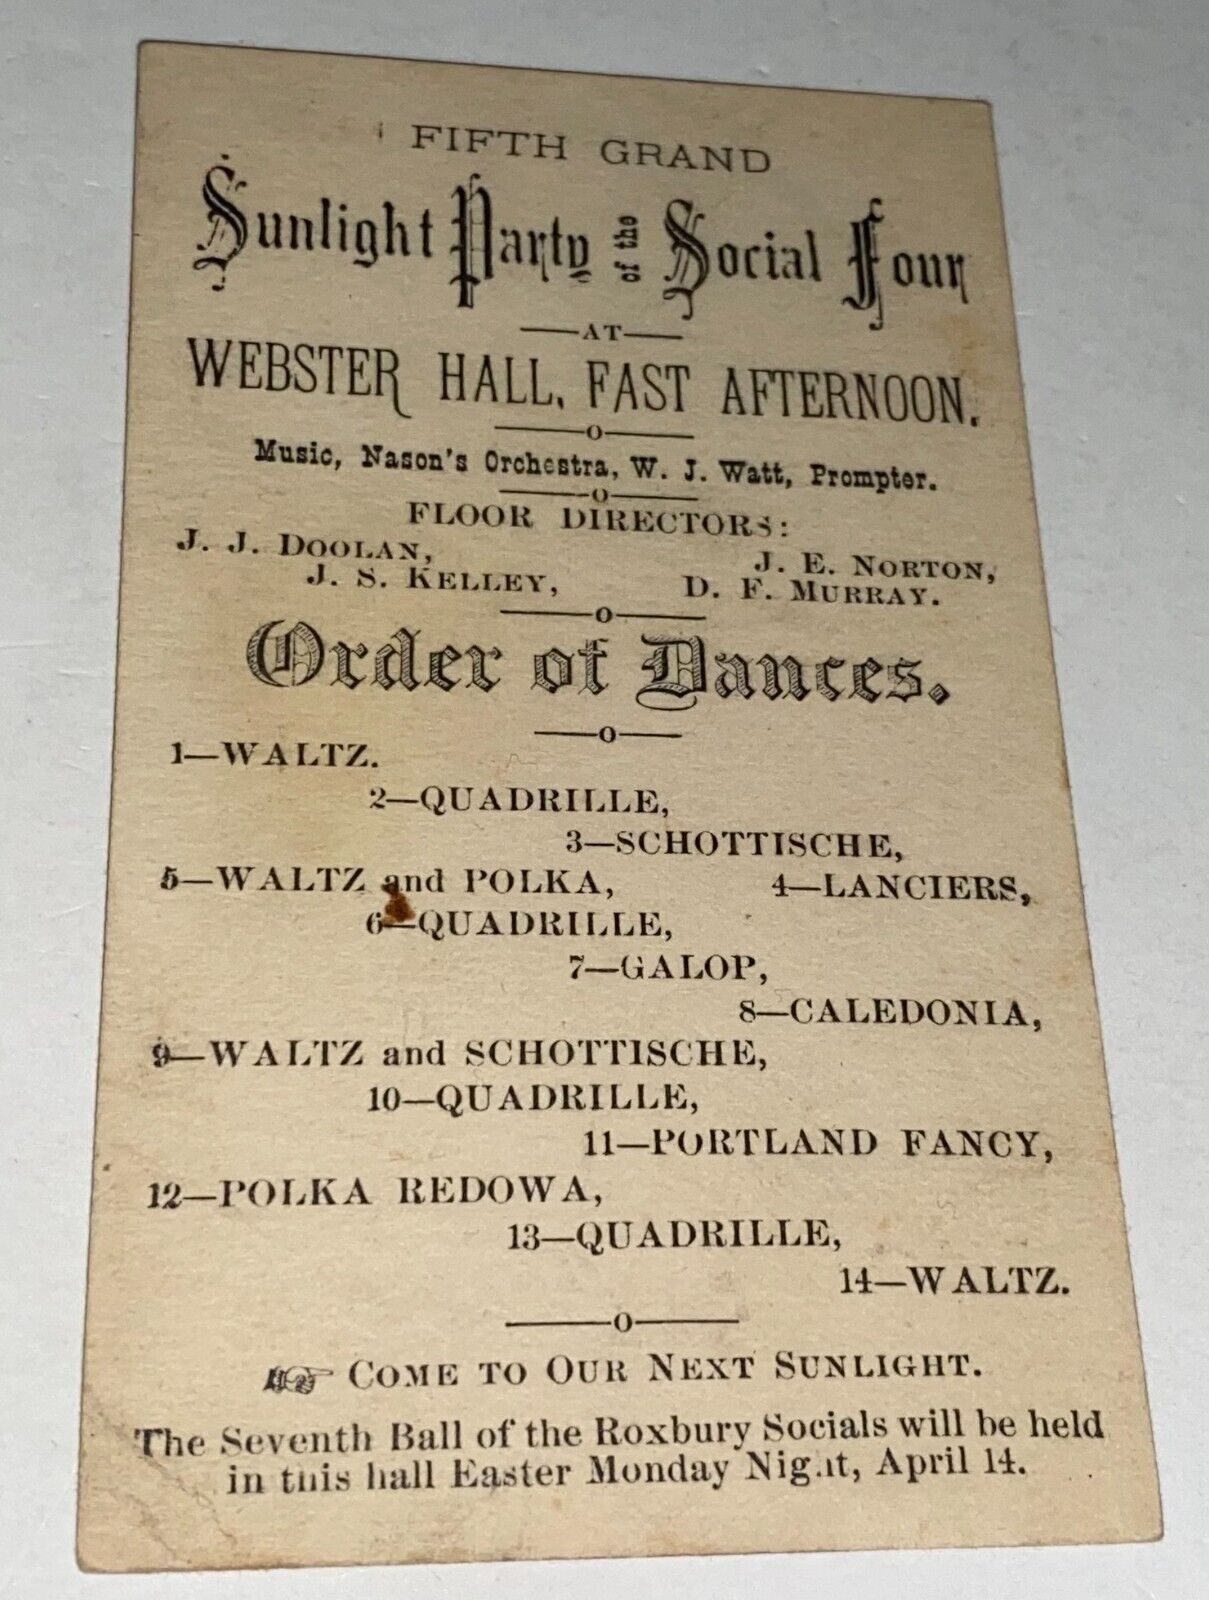 Rare Antique Sunlight Party, Social Four Webster Hall MA Dance Program Card 1884